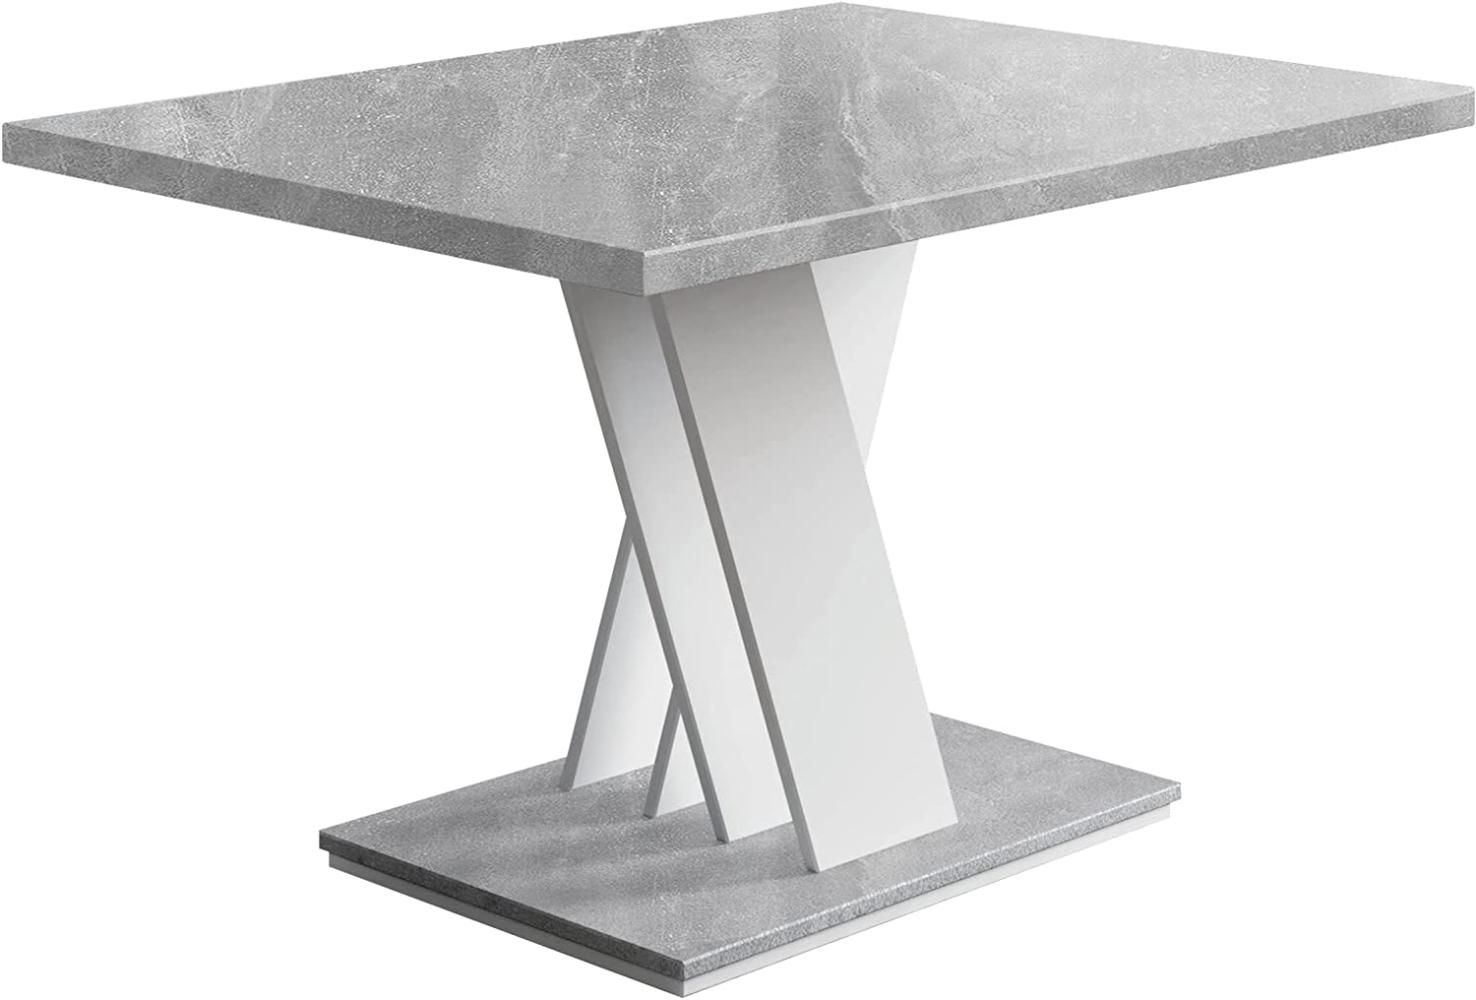 Tisch Atraks Mini weiß / grau Bild 1